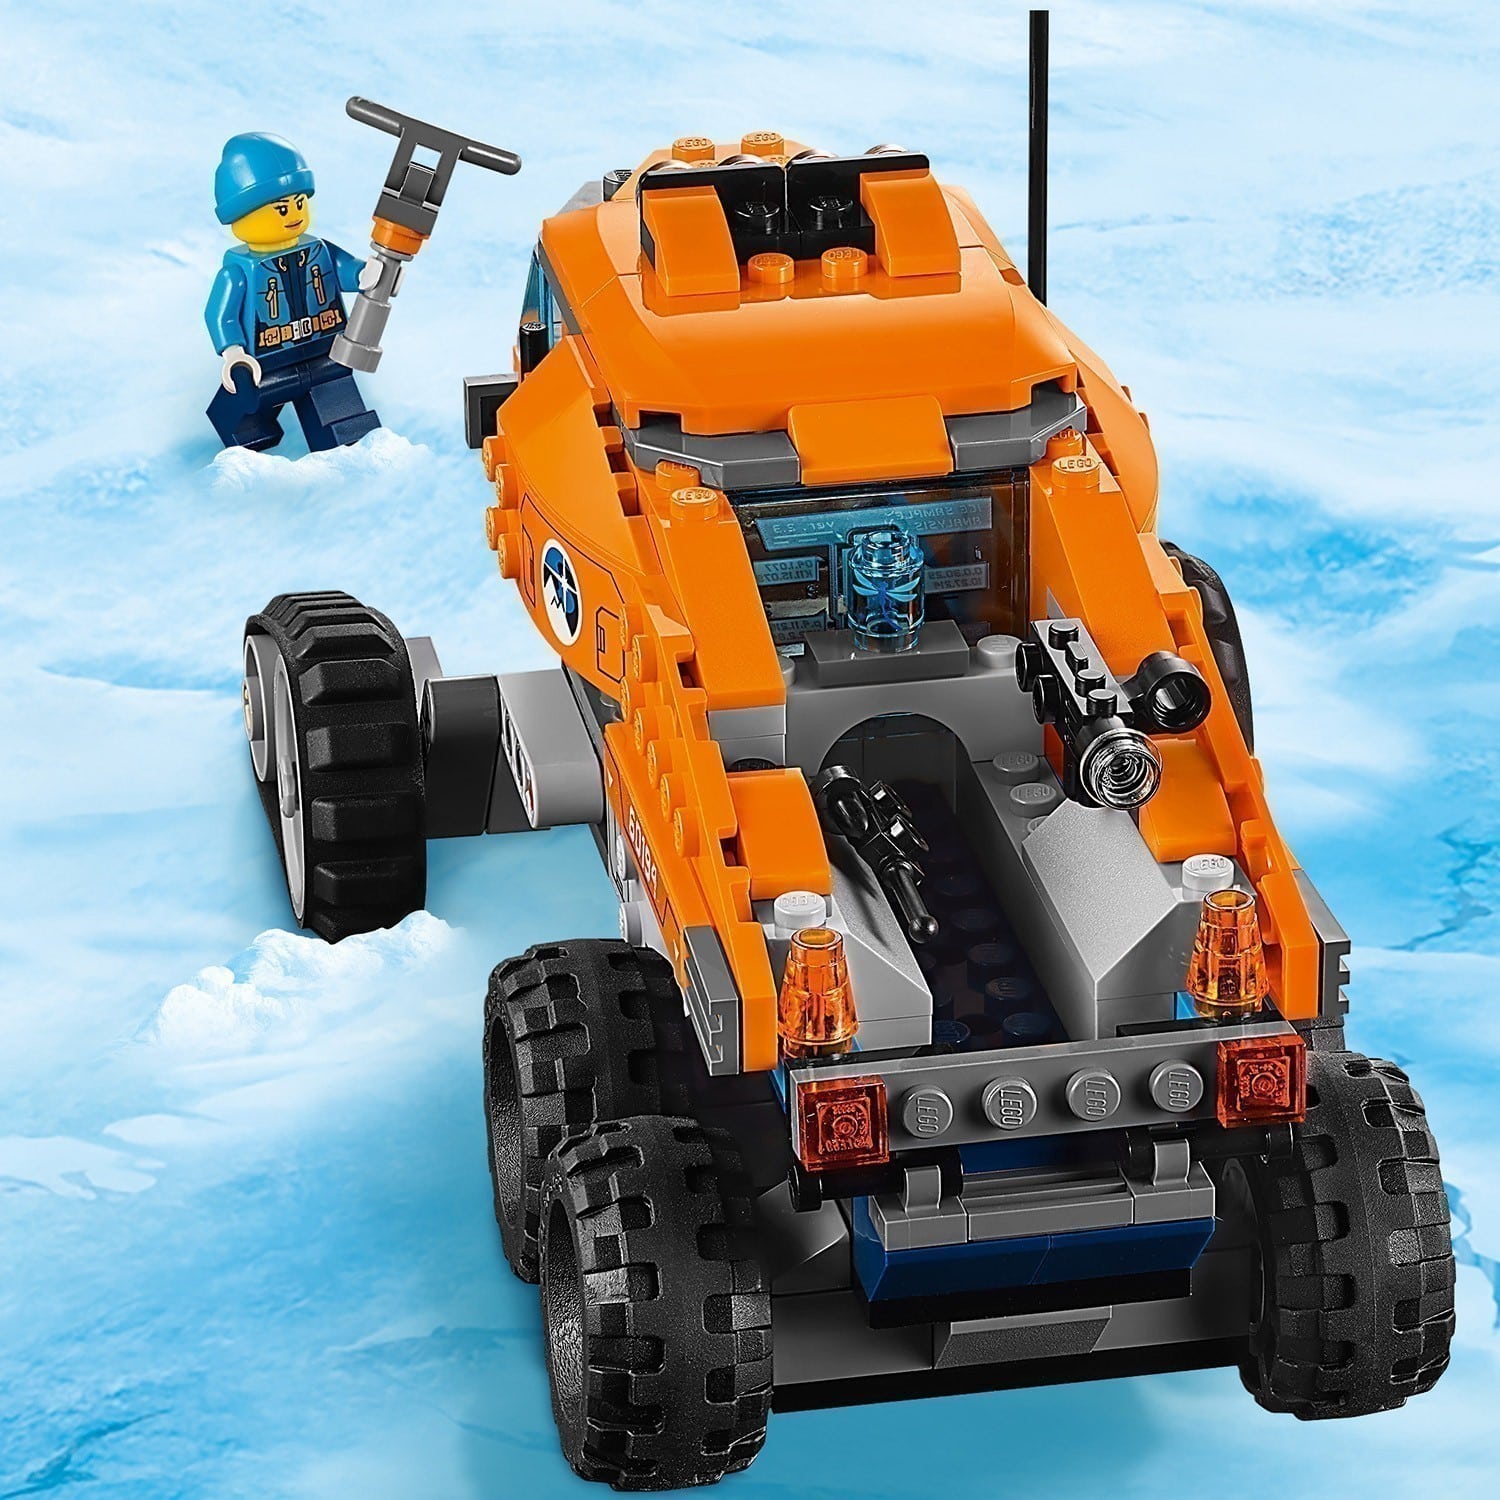 LEGO® City 60194 - Arctic Scout Truck